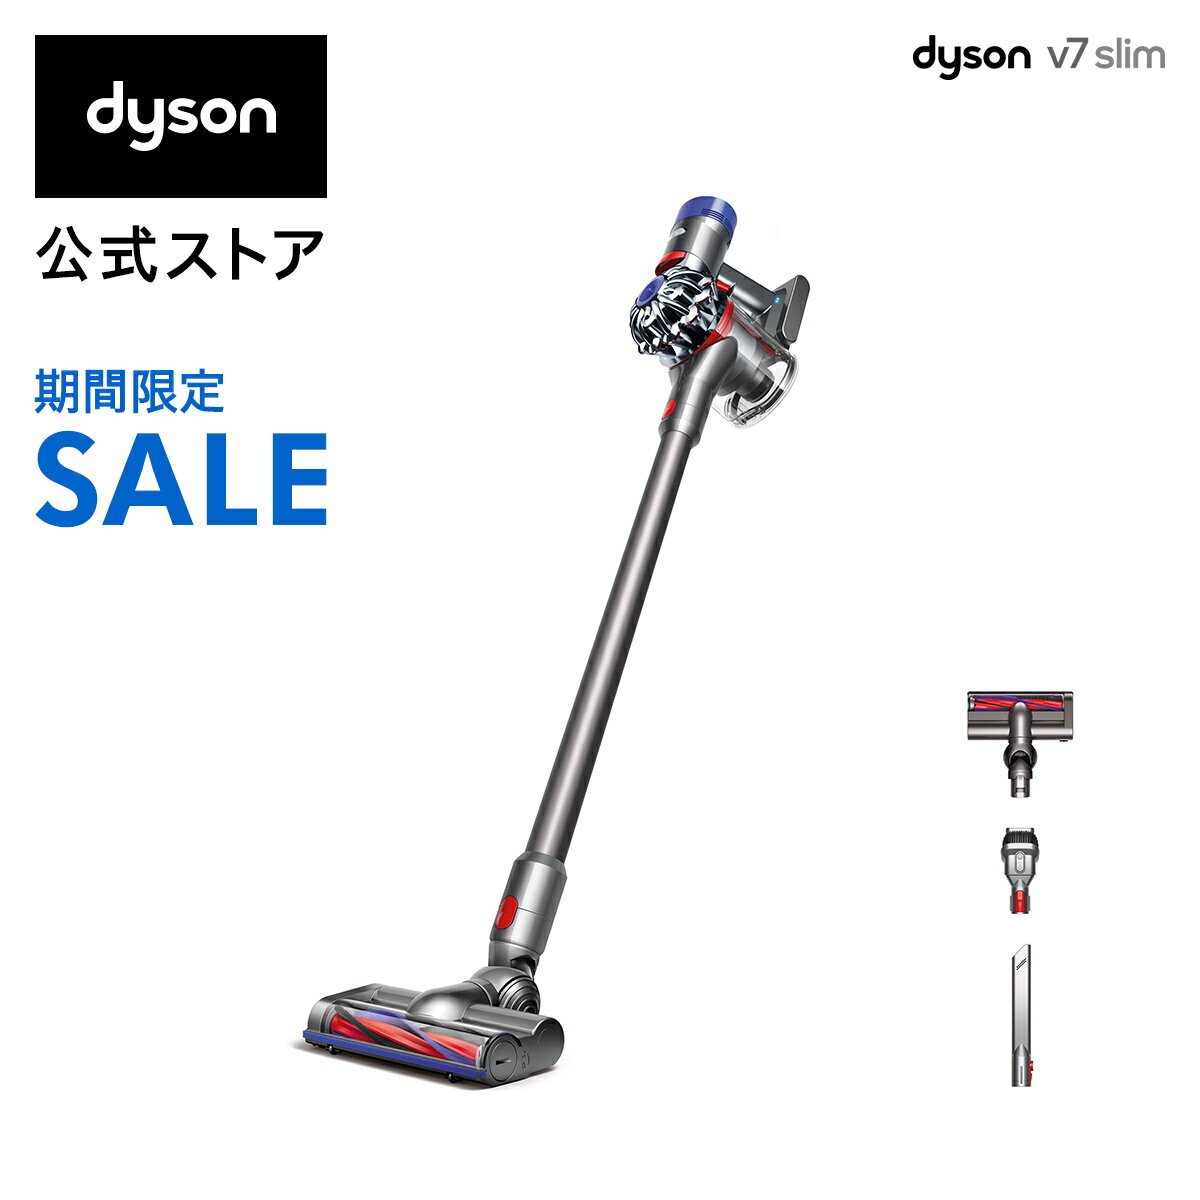 24%OFF【在庫限り】3/2 09:59まで！ダイソン Dyson V7 Slim サイクロン式 コードレス掃除機 dyson SV11SLM 軽量モデル